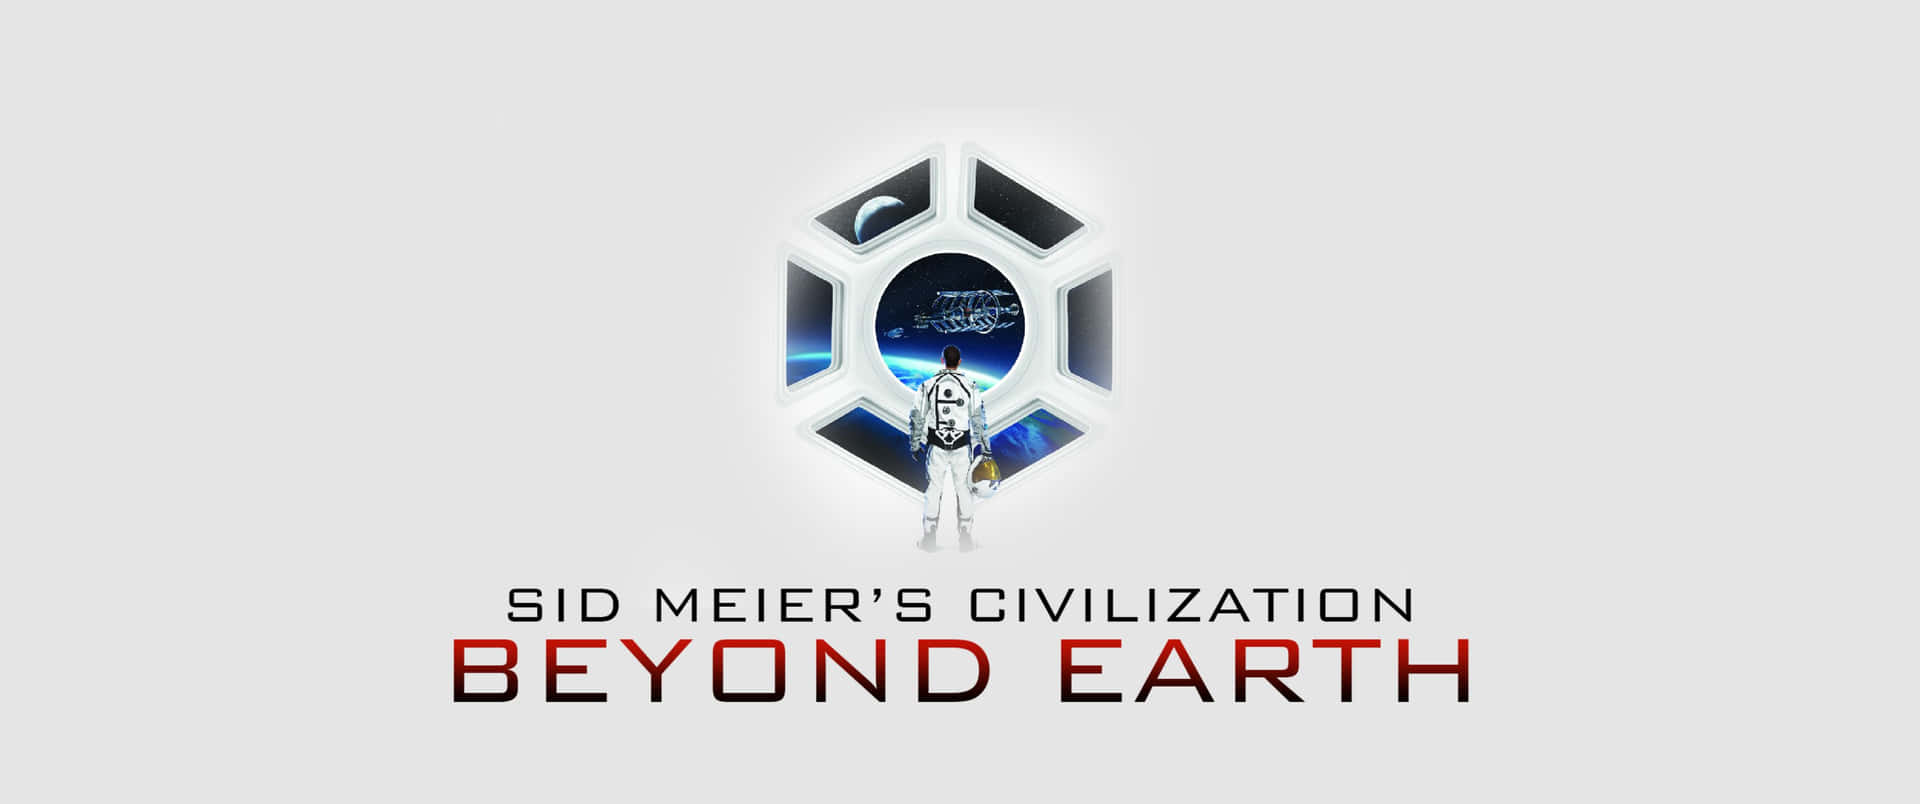 Fondode Pantalla Del Logo De Civilization Beyond Earth En Resolución De 3440x1440p.